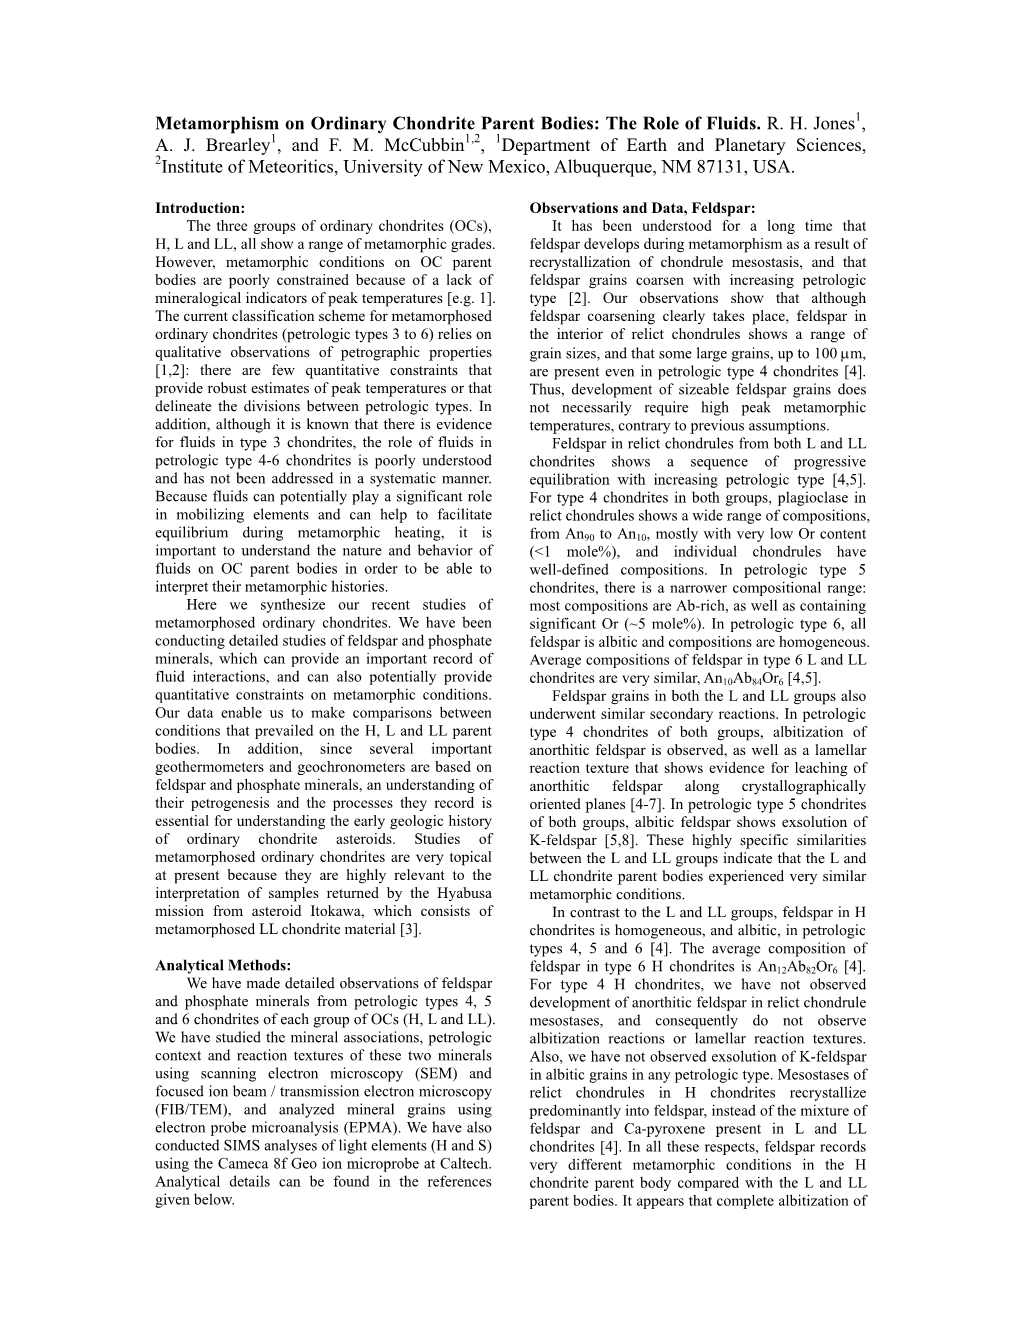 Metamorphism on Ordinary Chondrite Parent Bodies: the Role of Fluids. R. H. Jones1, A. J. Brearley1, and F. M. Mccubbin1,2, 1Dep